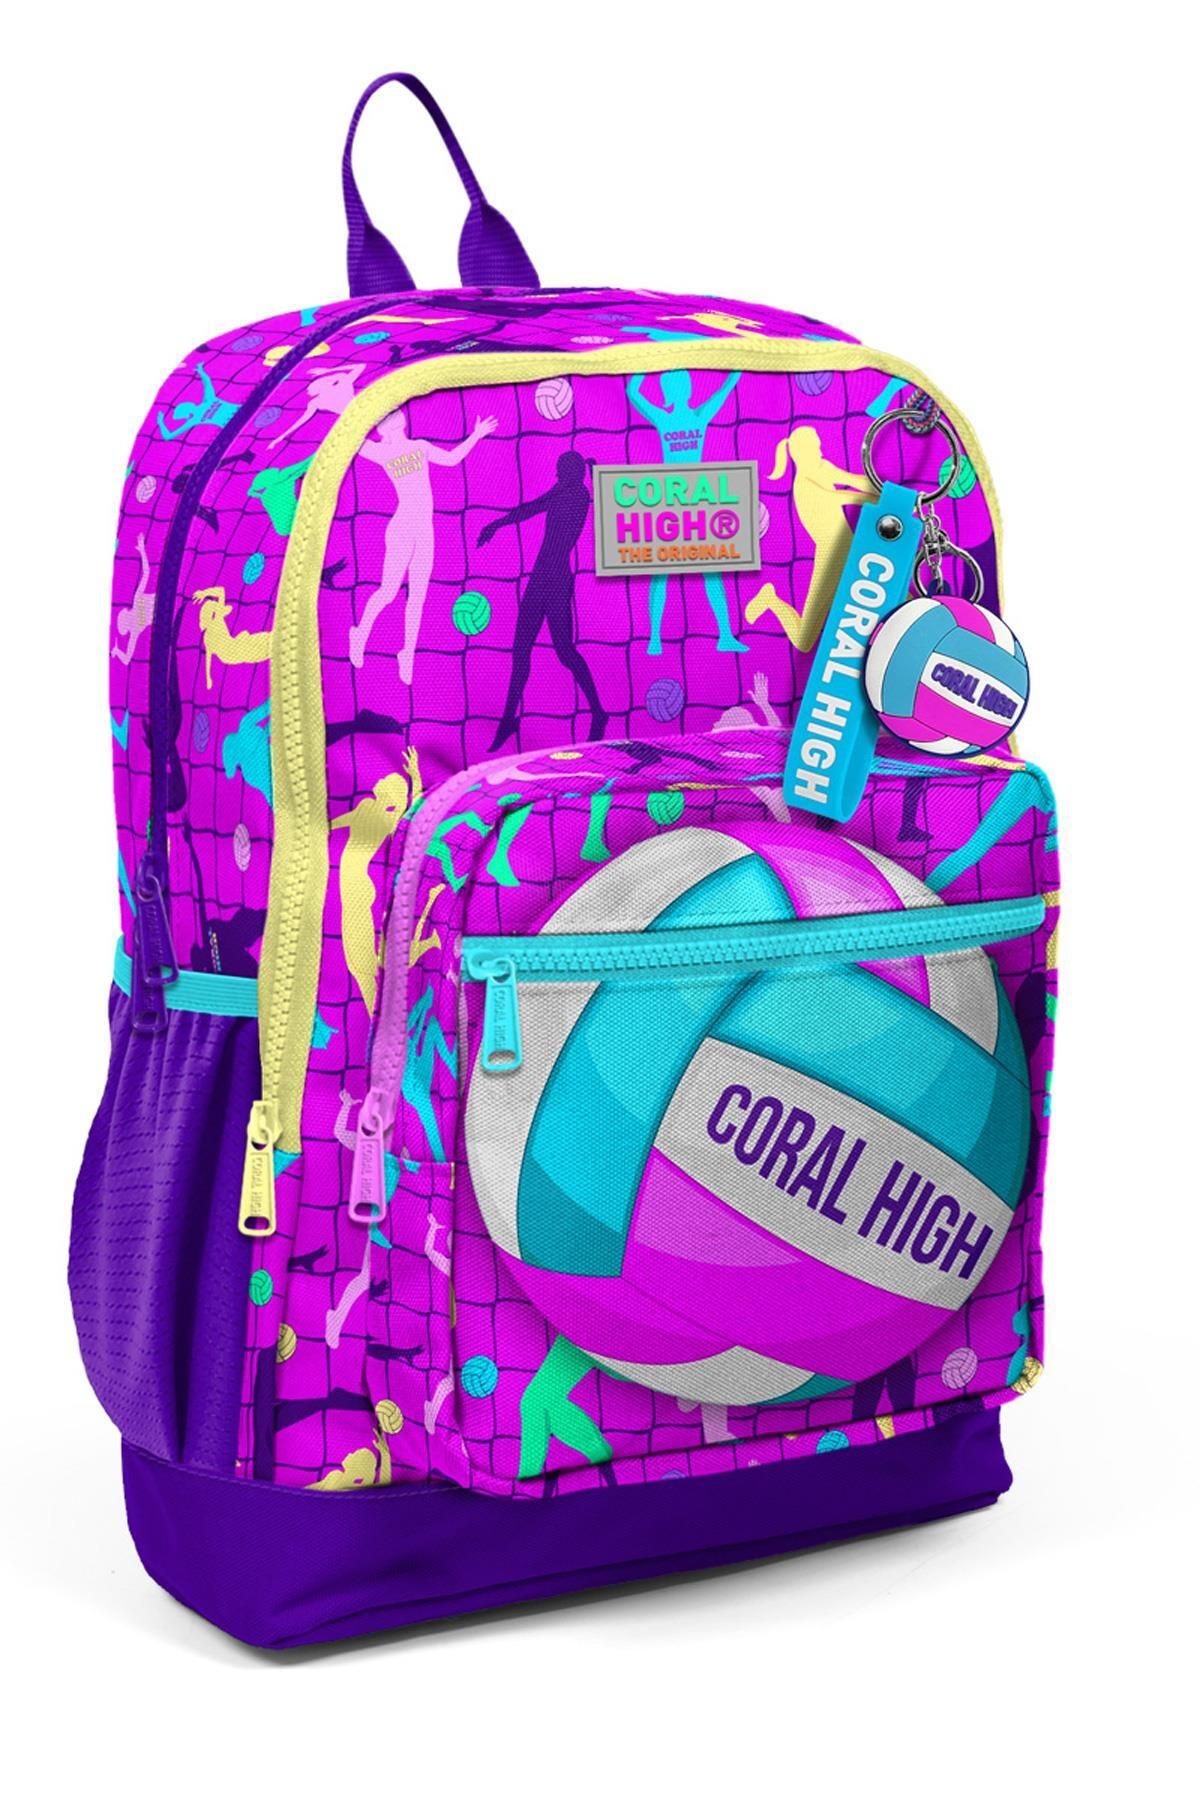 Coral High Kids Pembe Mor Voleybol Desenli Okul Sırt Çantası 23761